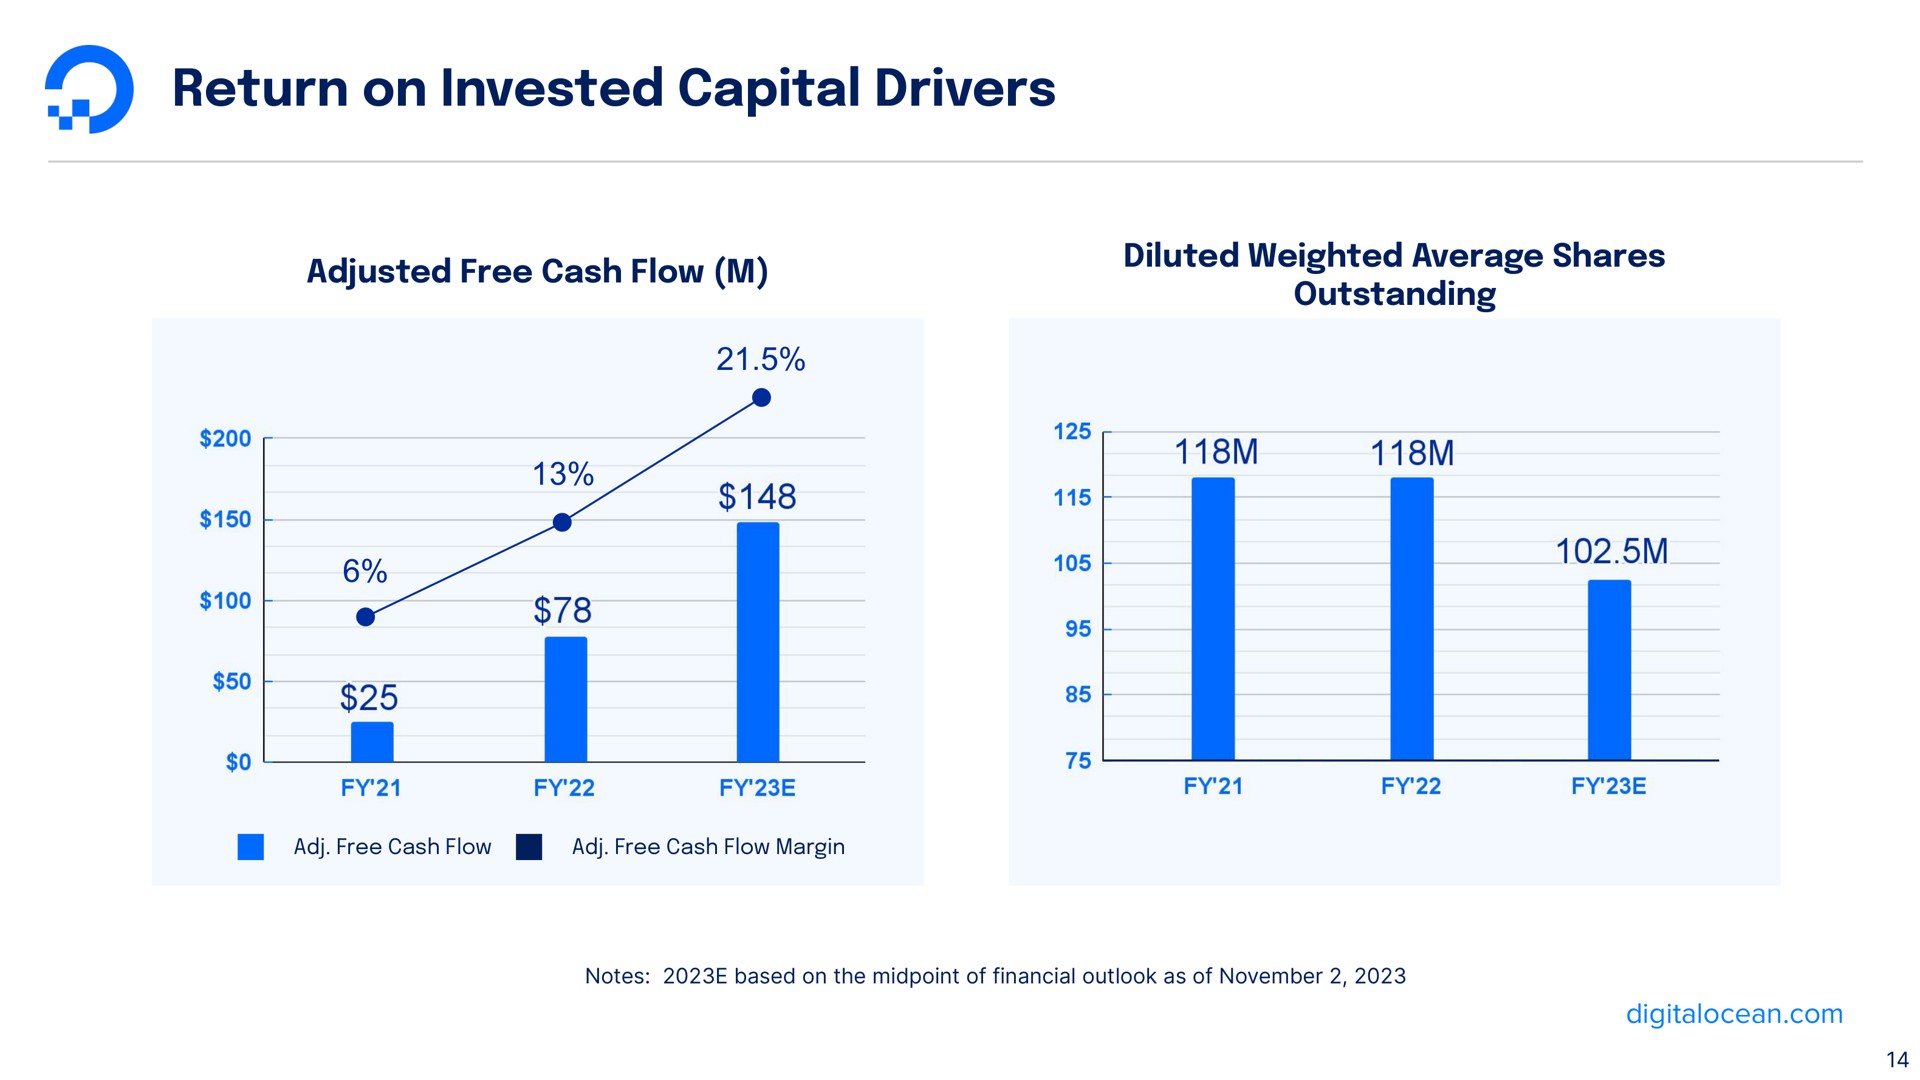 return on invested capital drivers | DigitalOcean